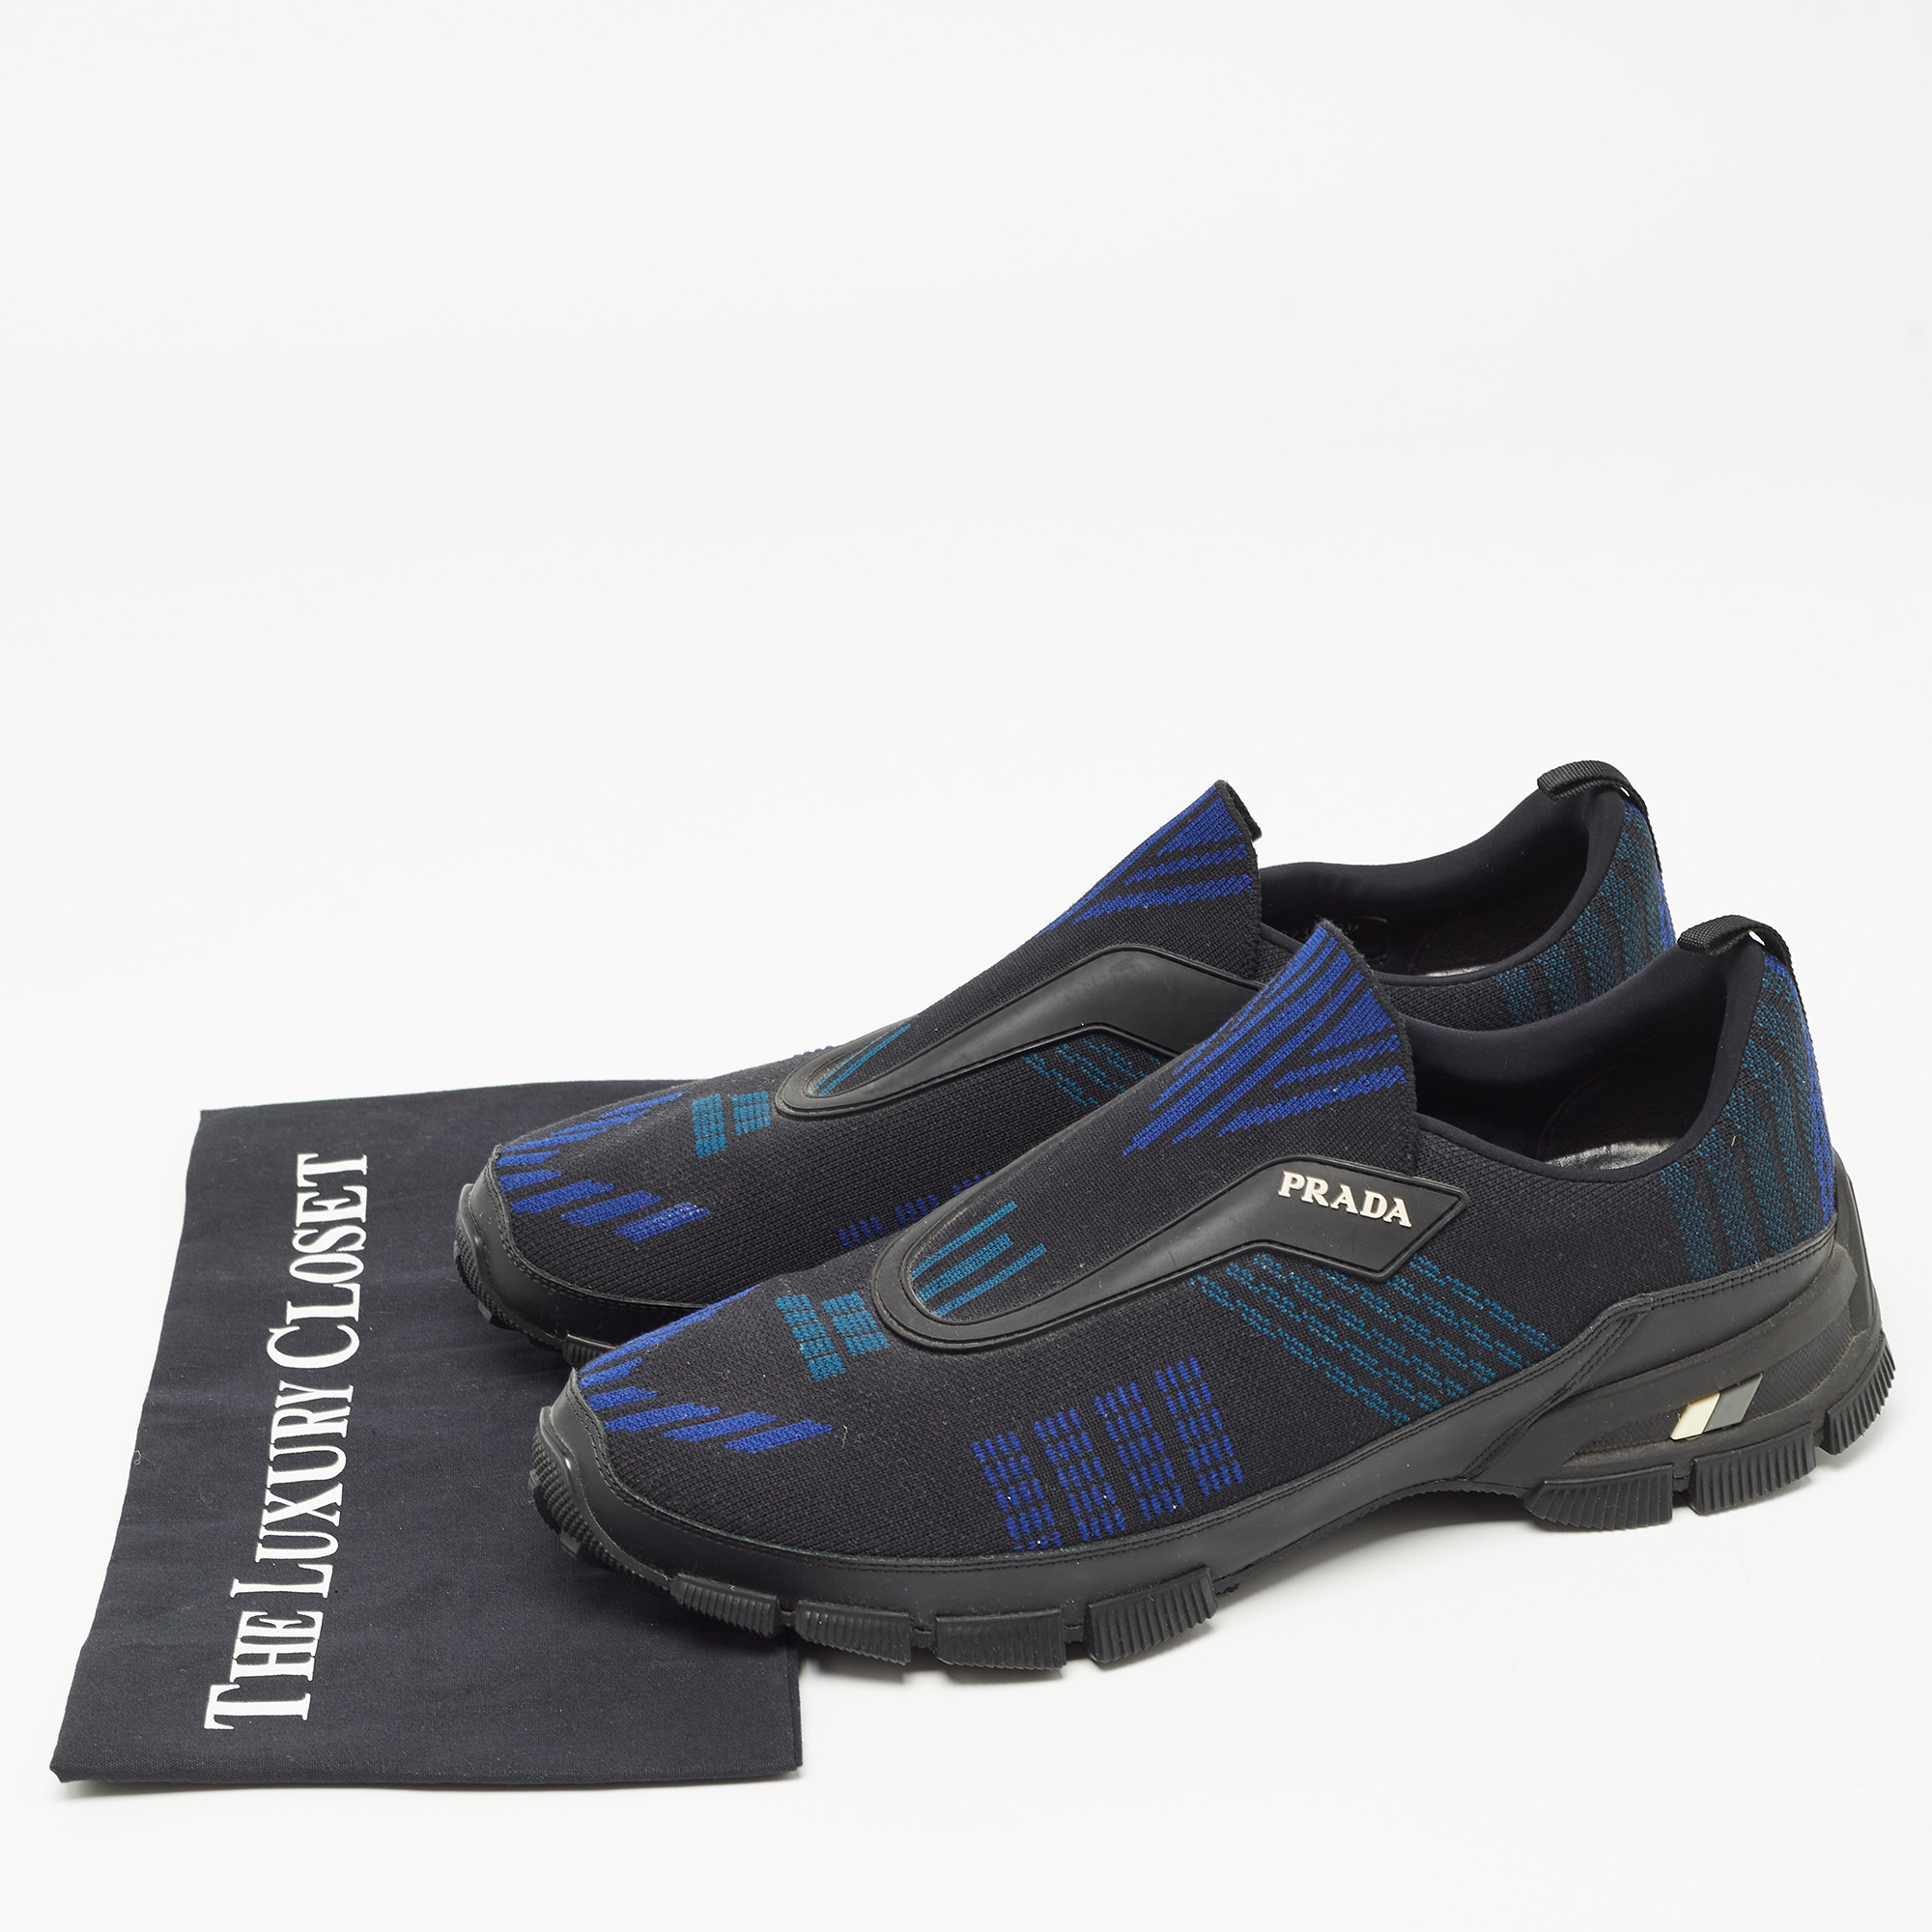 Prada Black/Blue Knit Fabric Low Top Sneakers Size 42.5